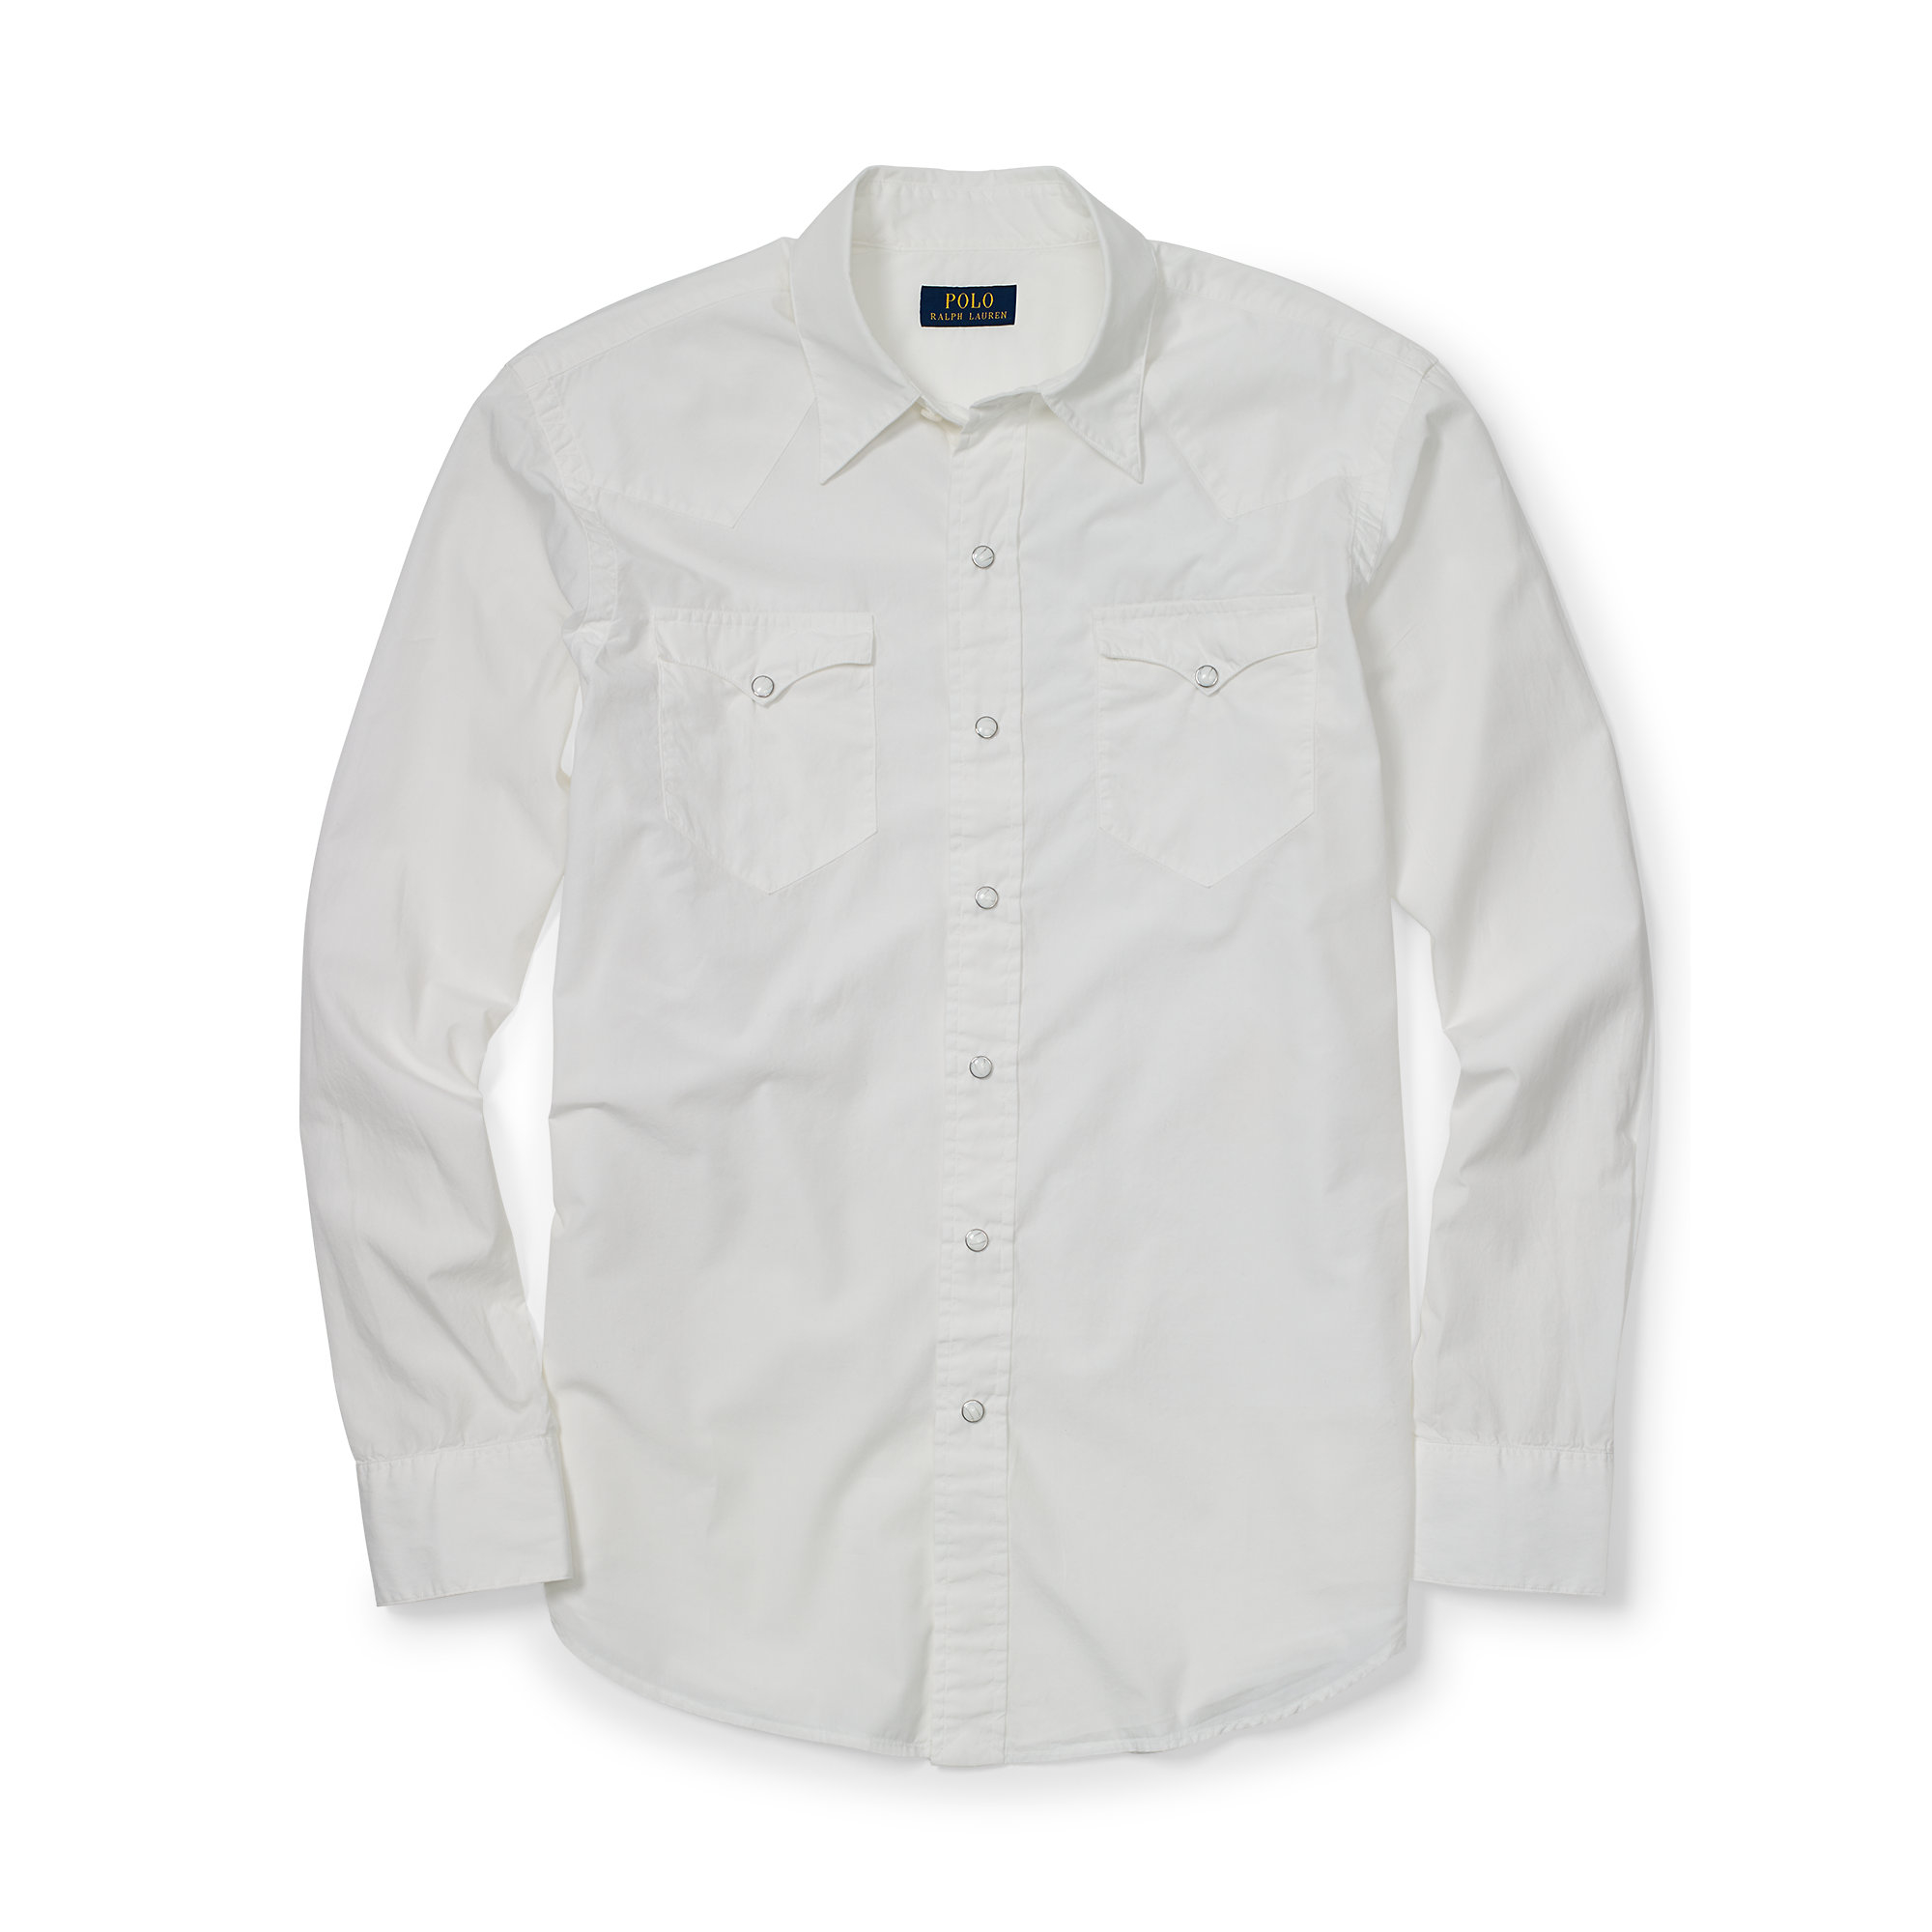 Polo Ralph Lauren Cotton-silk Western Shirt in White for Men - Lyst